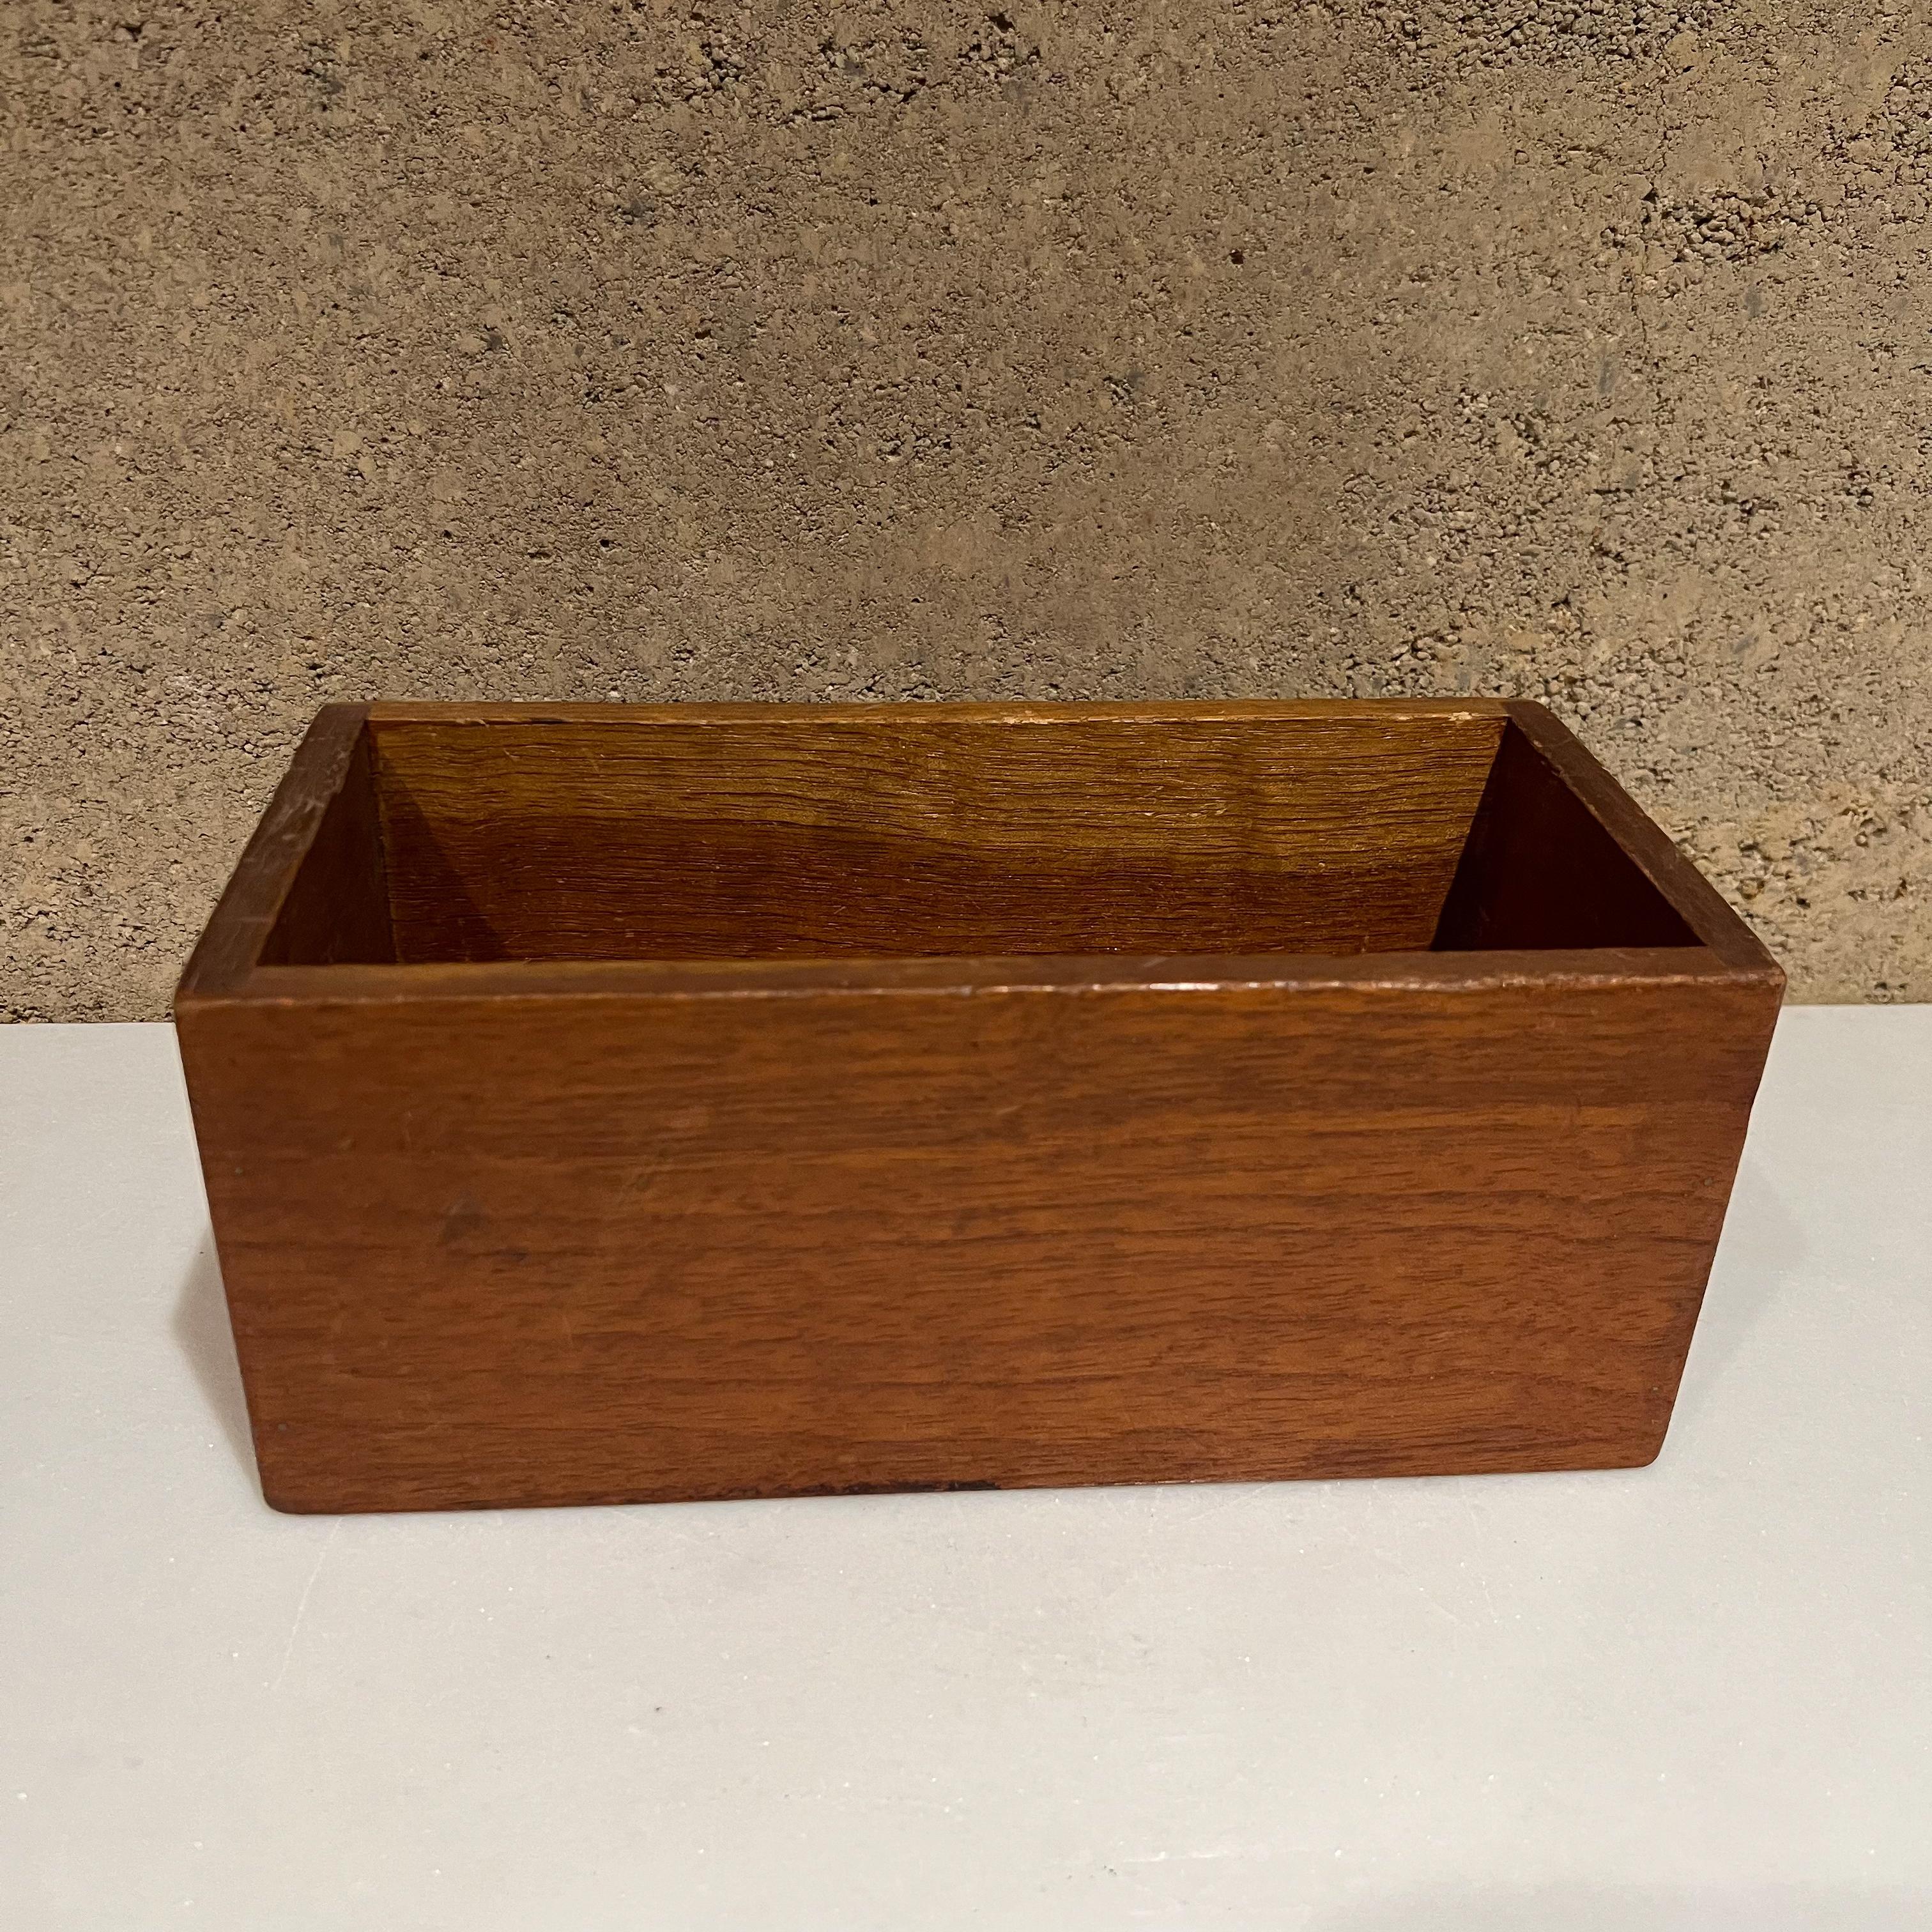 1960s Exotic Wood Simple Storage Box Ideal Cedar Catch All Minimalist Design 3